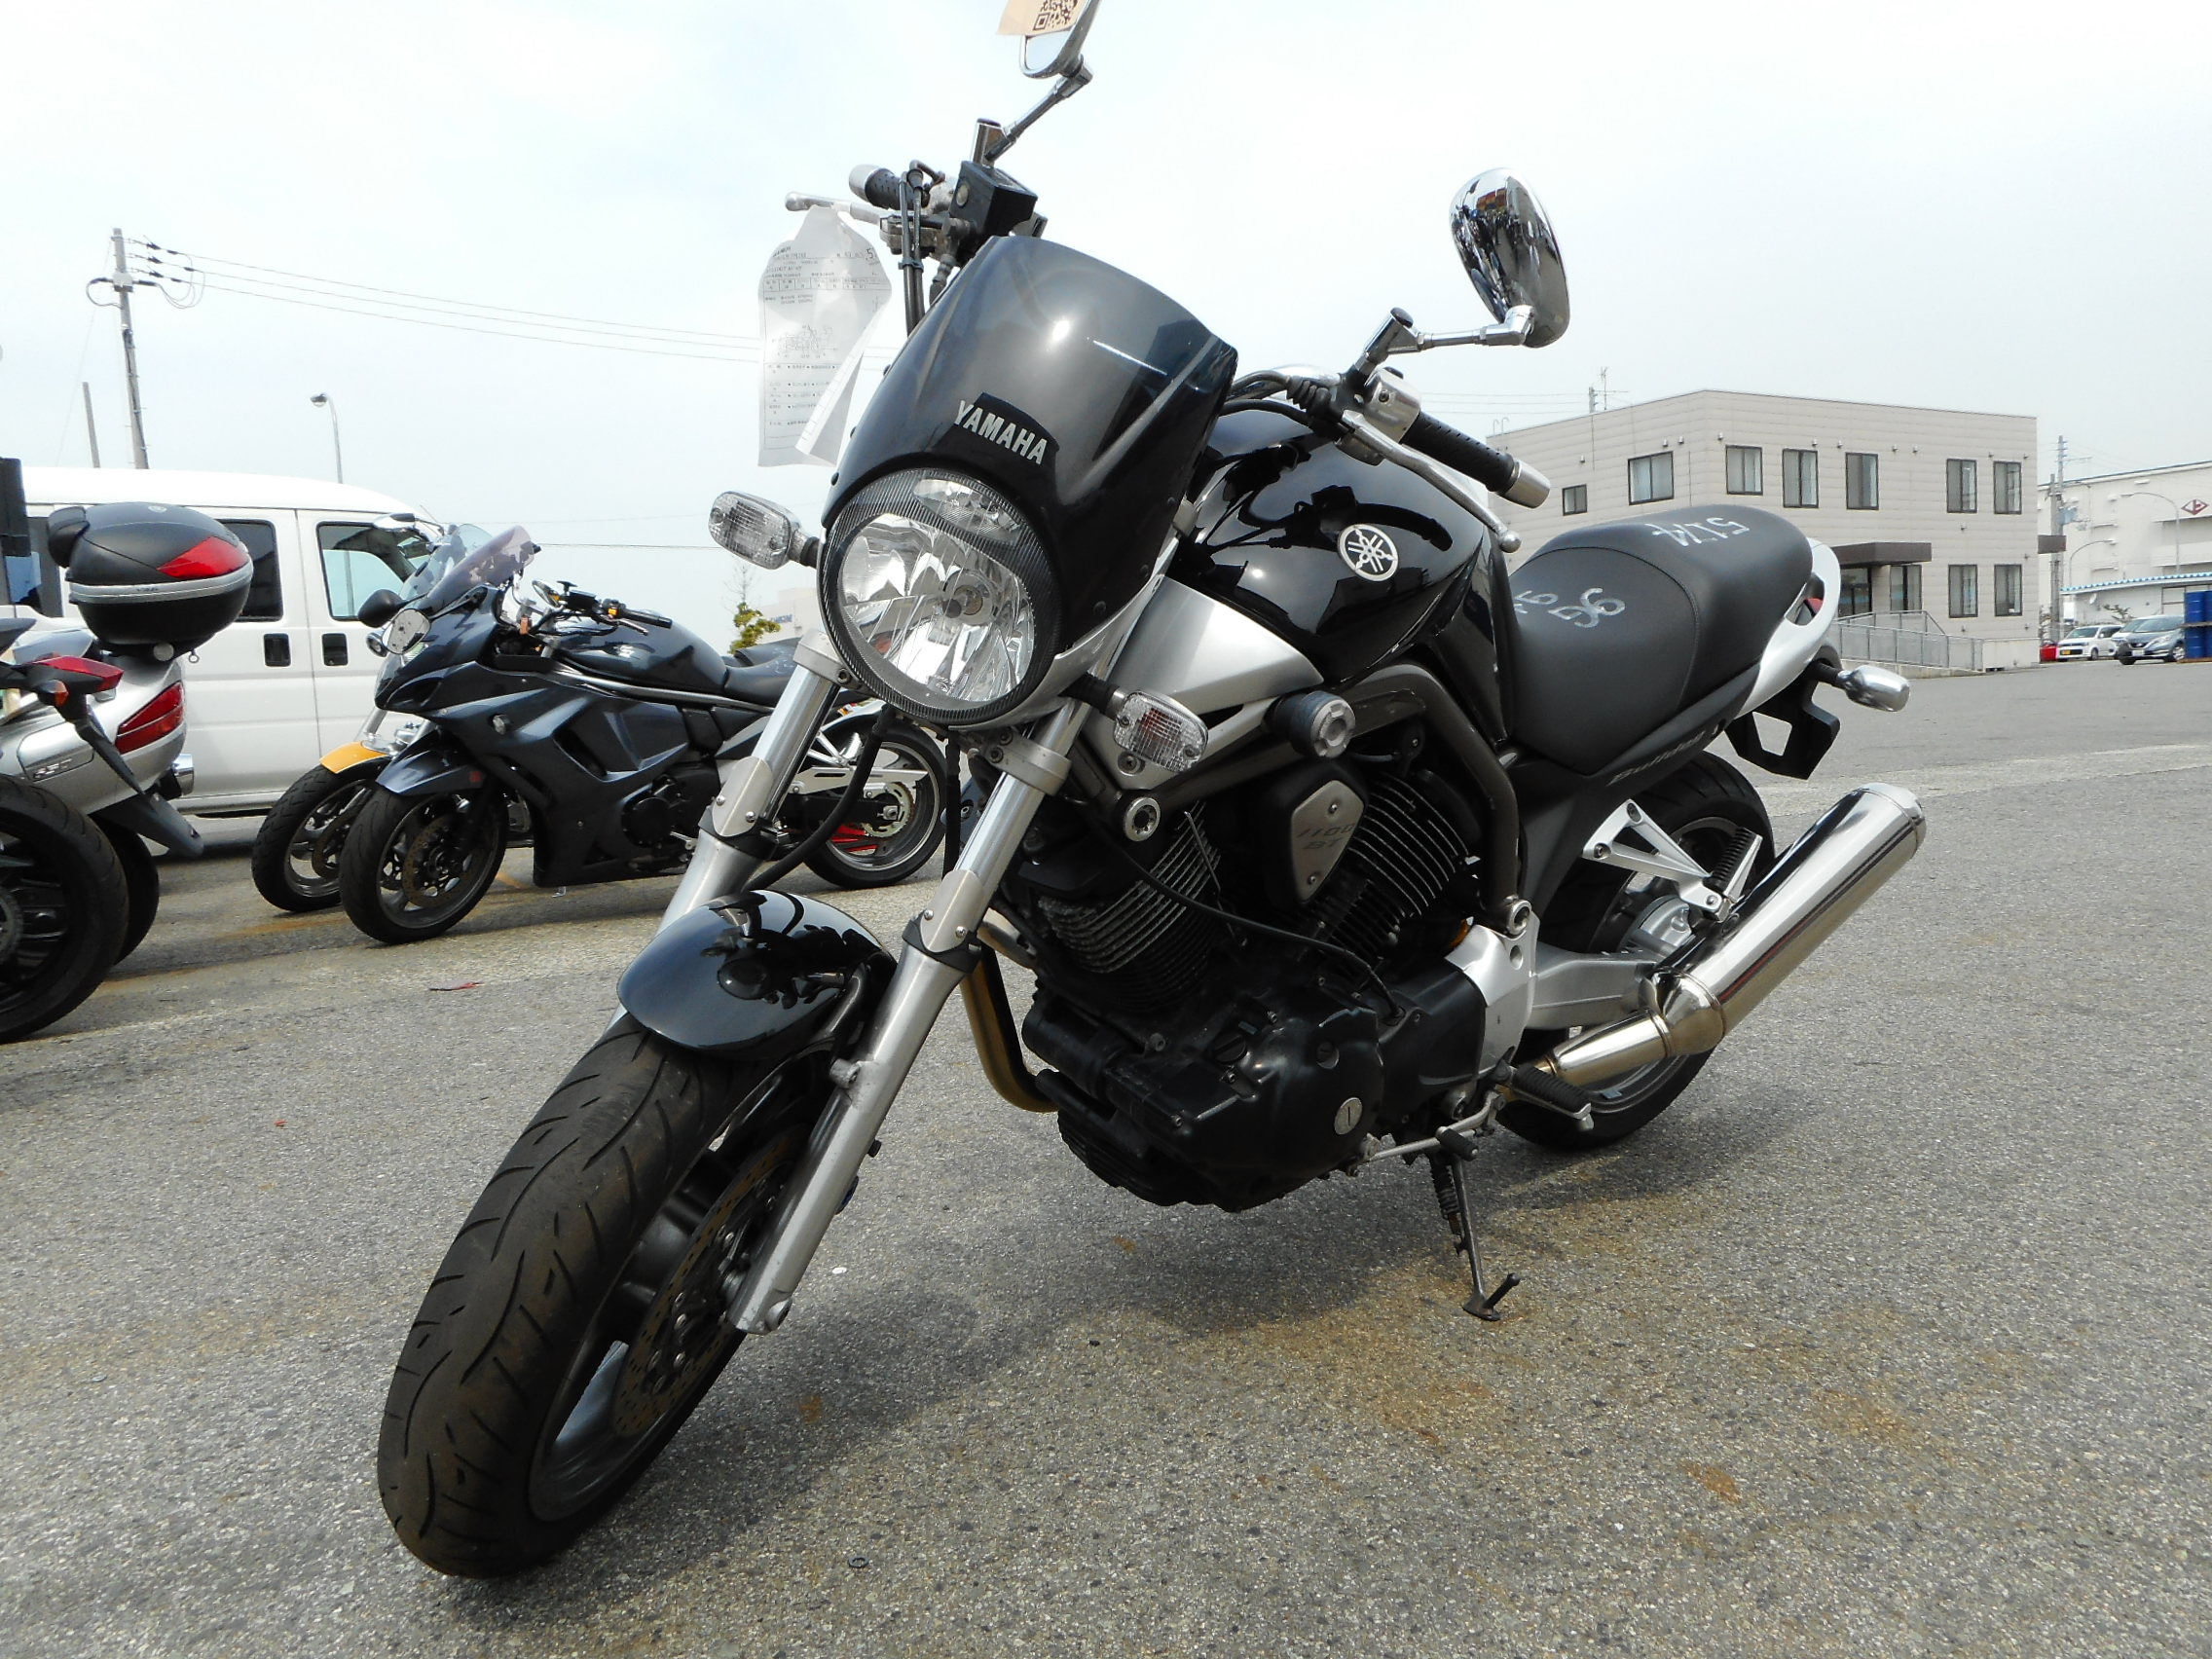 Мотоцикл ямаха xt660z tenere - надежный туристический эндуро